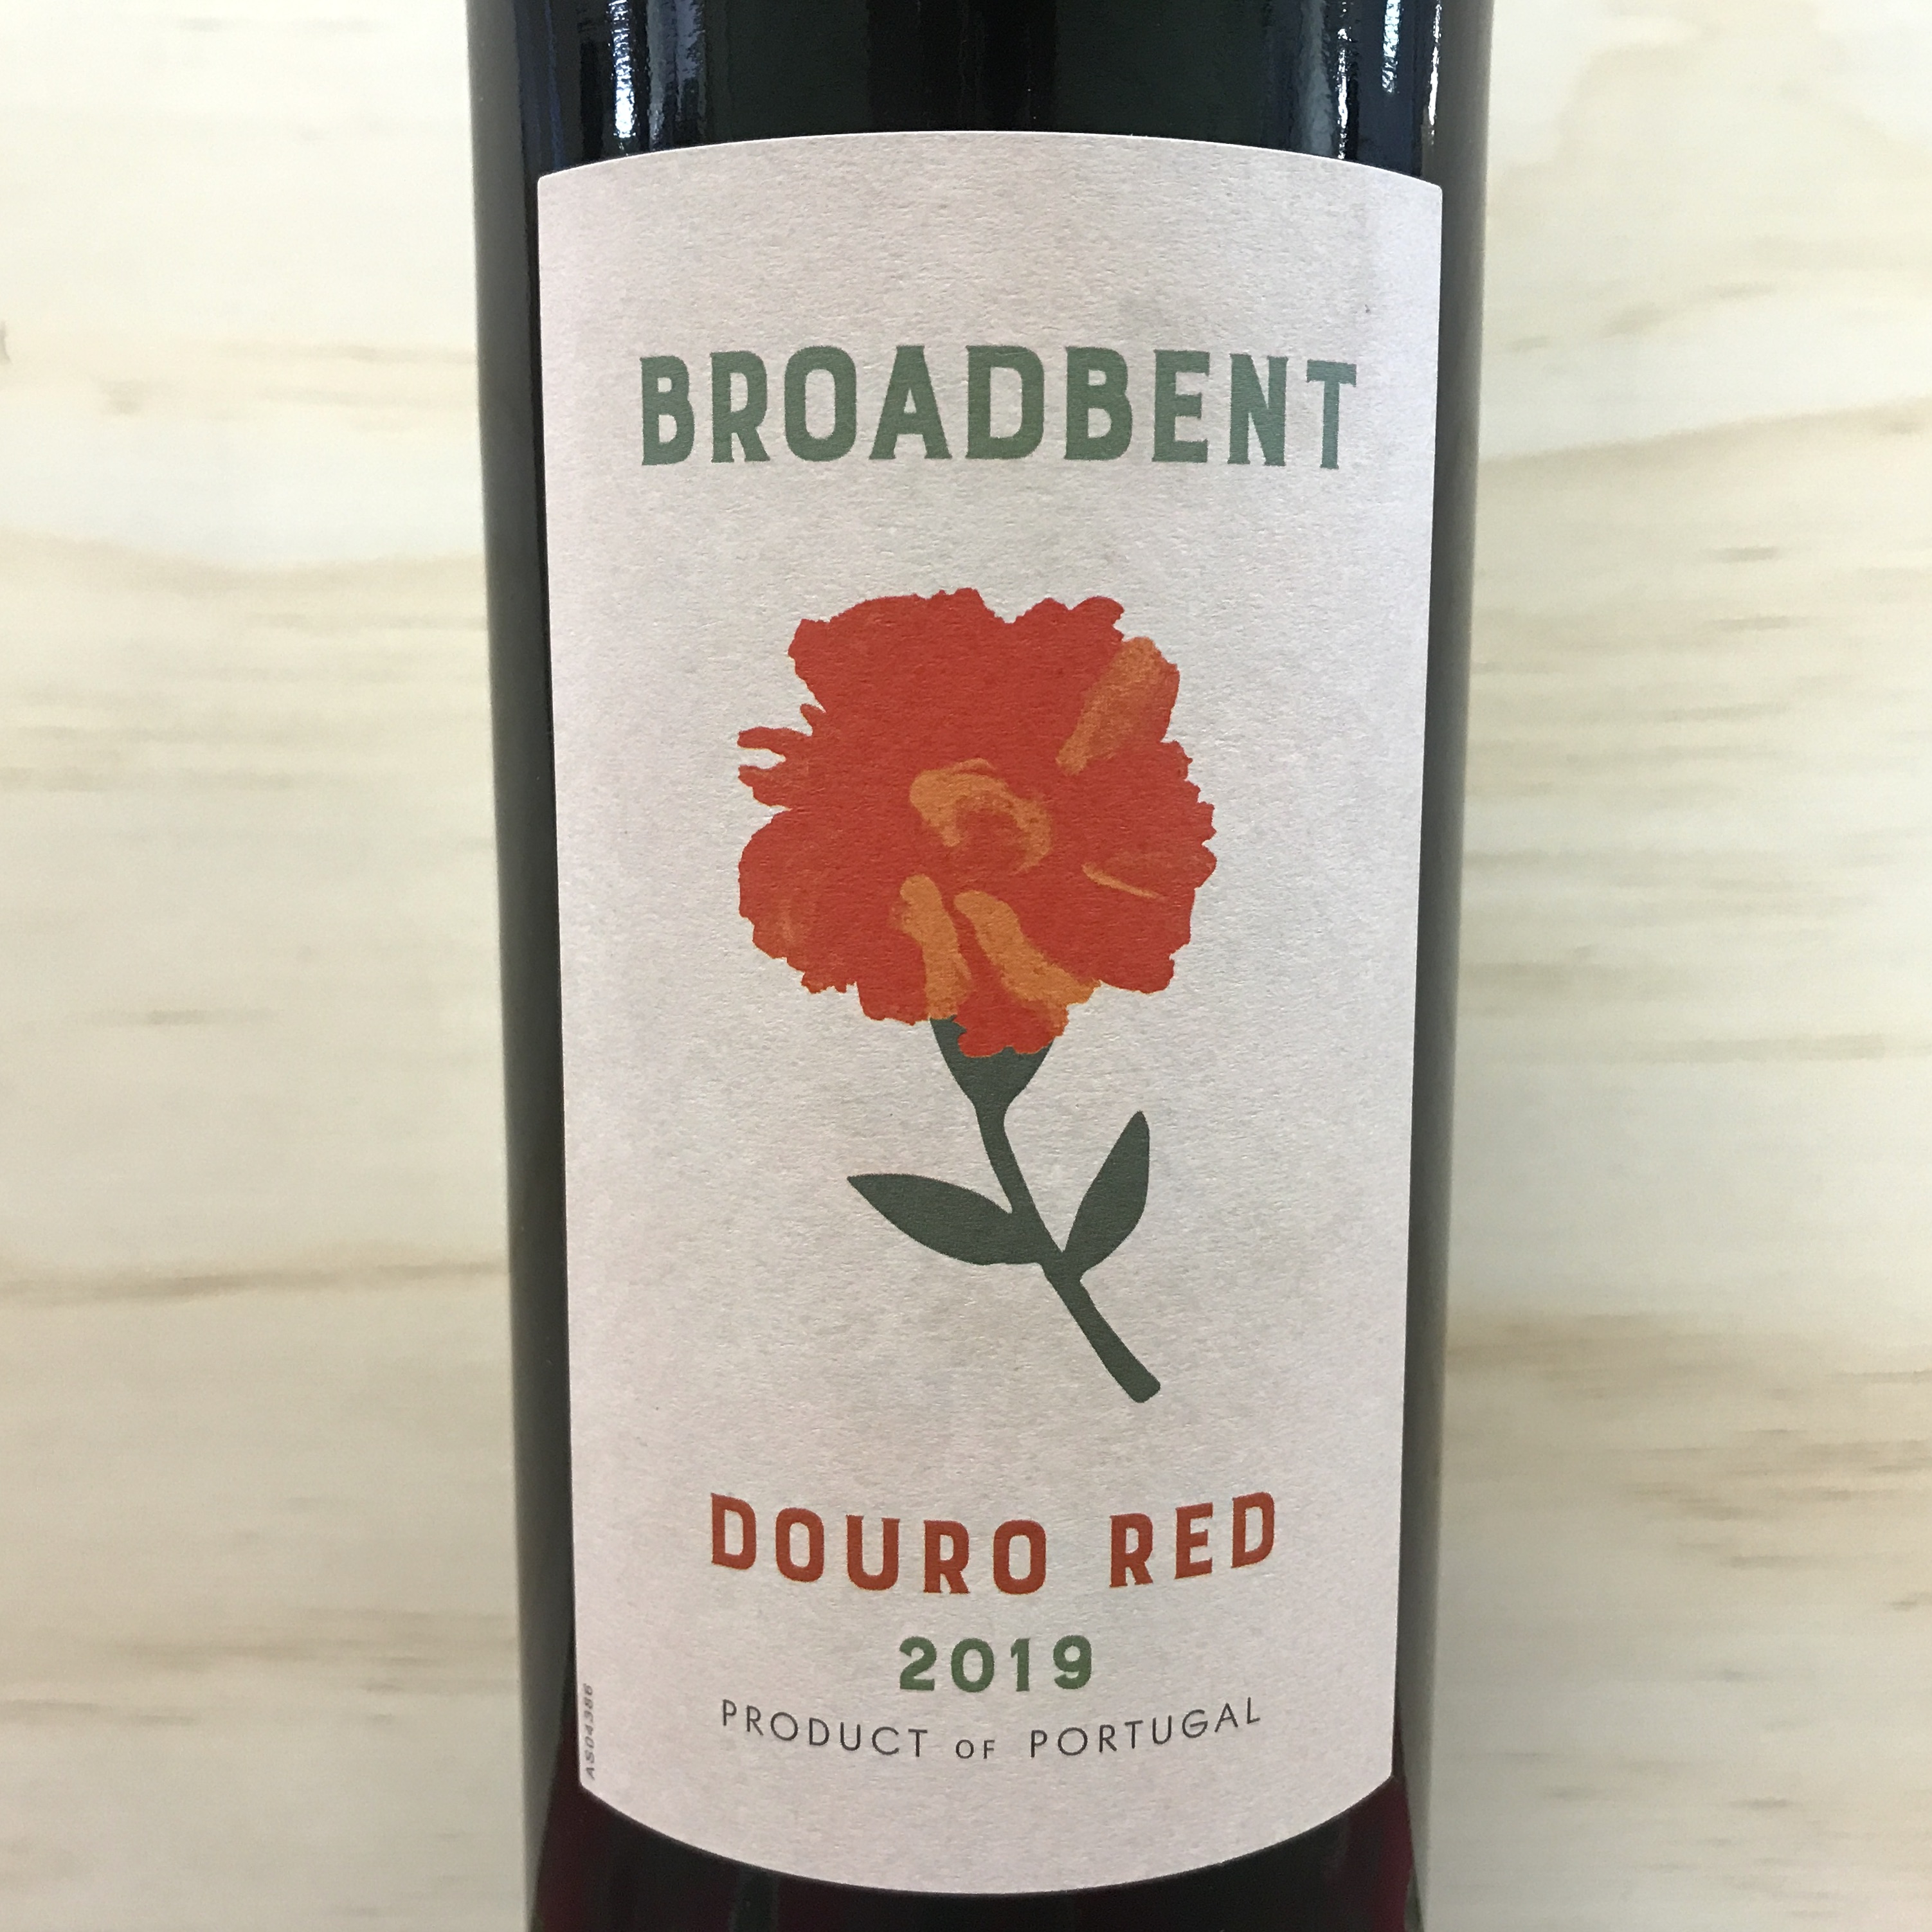 Broadbent Douro Red 2019